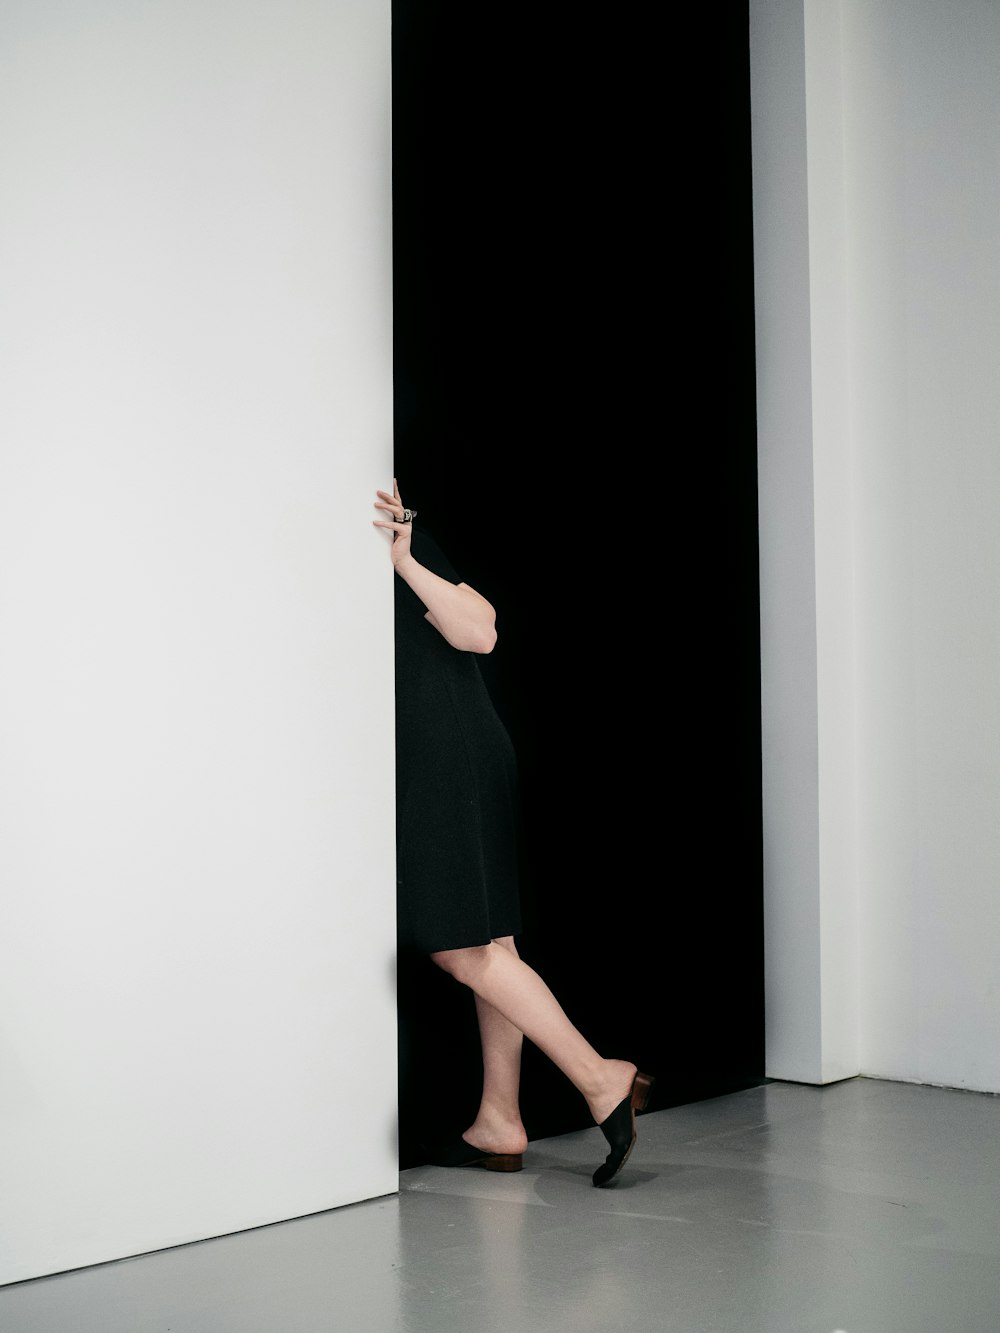 woman standing sneaking on door inside white painted room